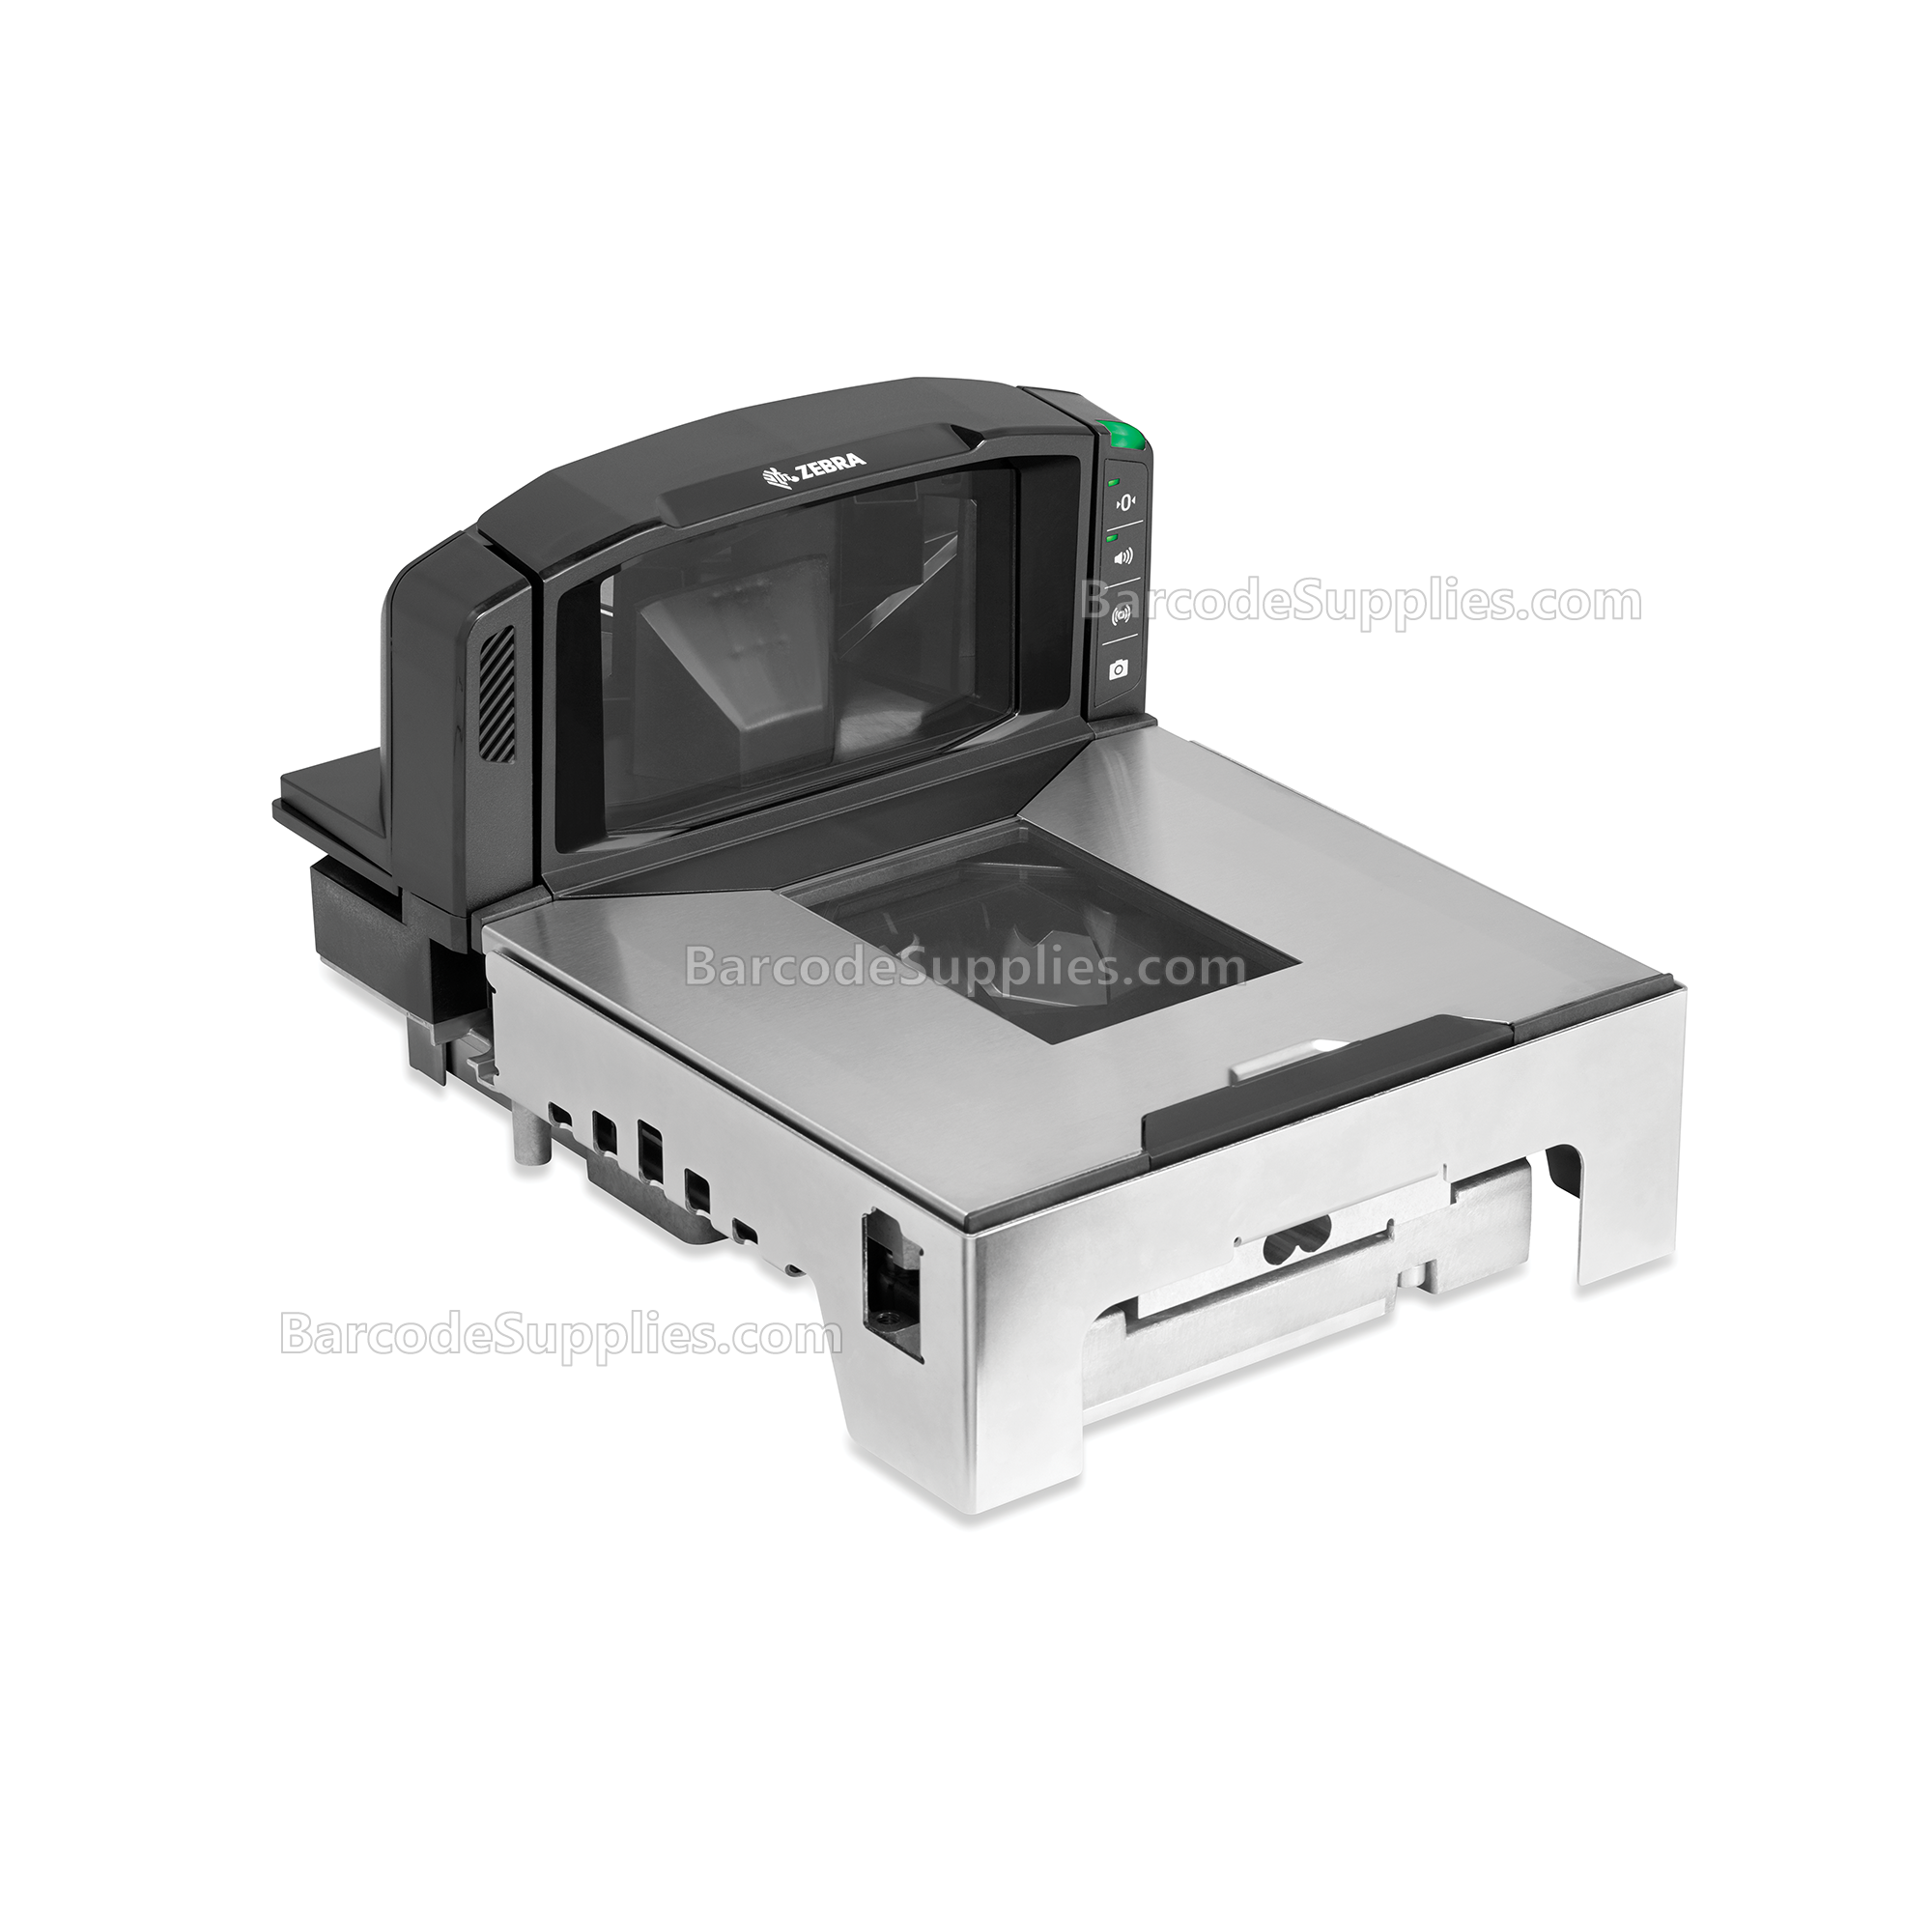 Zebra MP7001: Multiplane scanner, medium, single interval scale, drivers license parsing, sapphire glass, color camera module landscape, United States